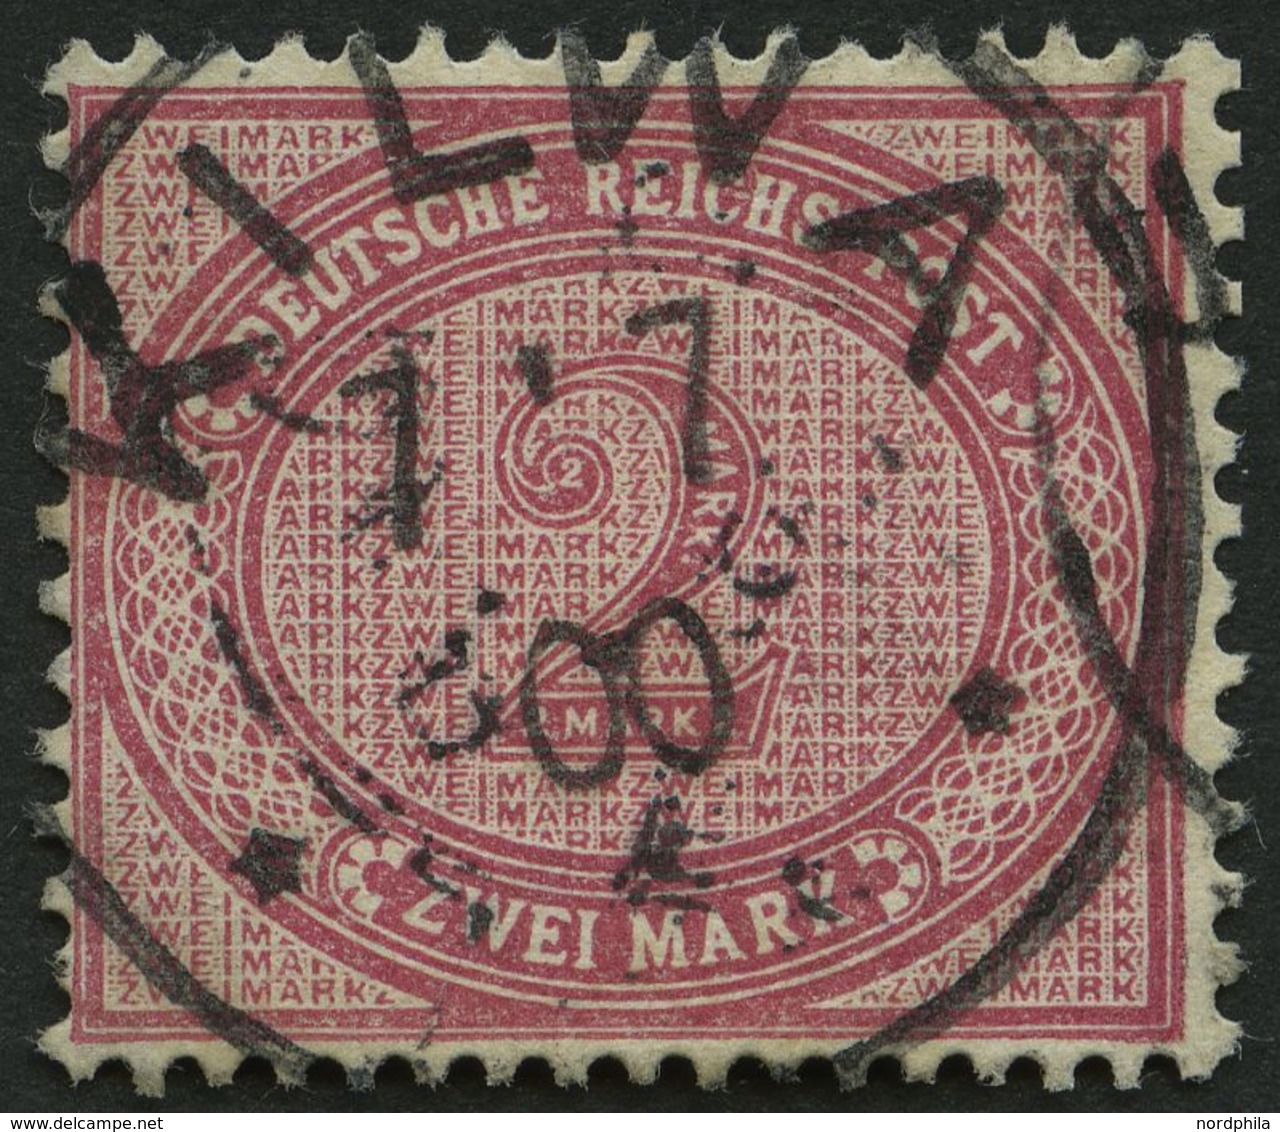 DEUTSCH-OSTAFRIKA VO 37f O, 1900, 2 M. Rötlichkarmin, K1 KILWA, Pracht, Gepr. Pauligk - German East Africa